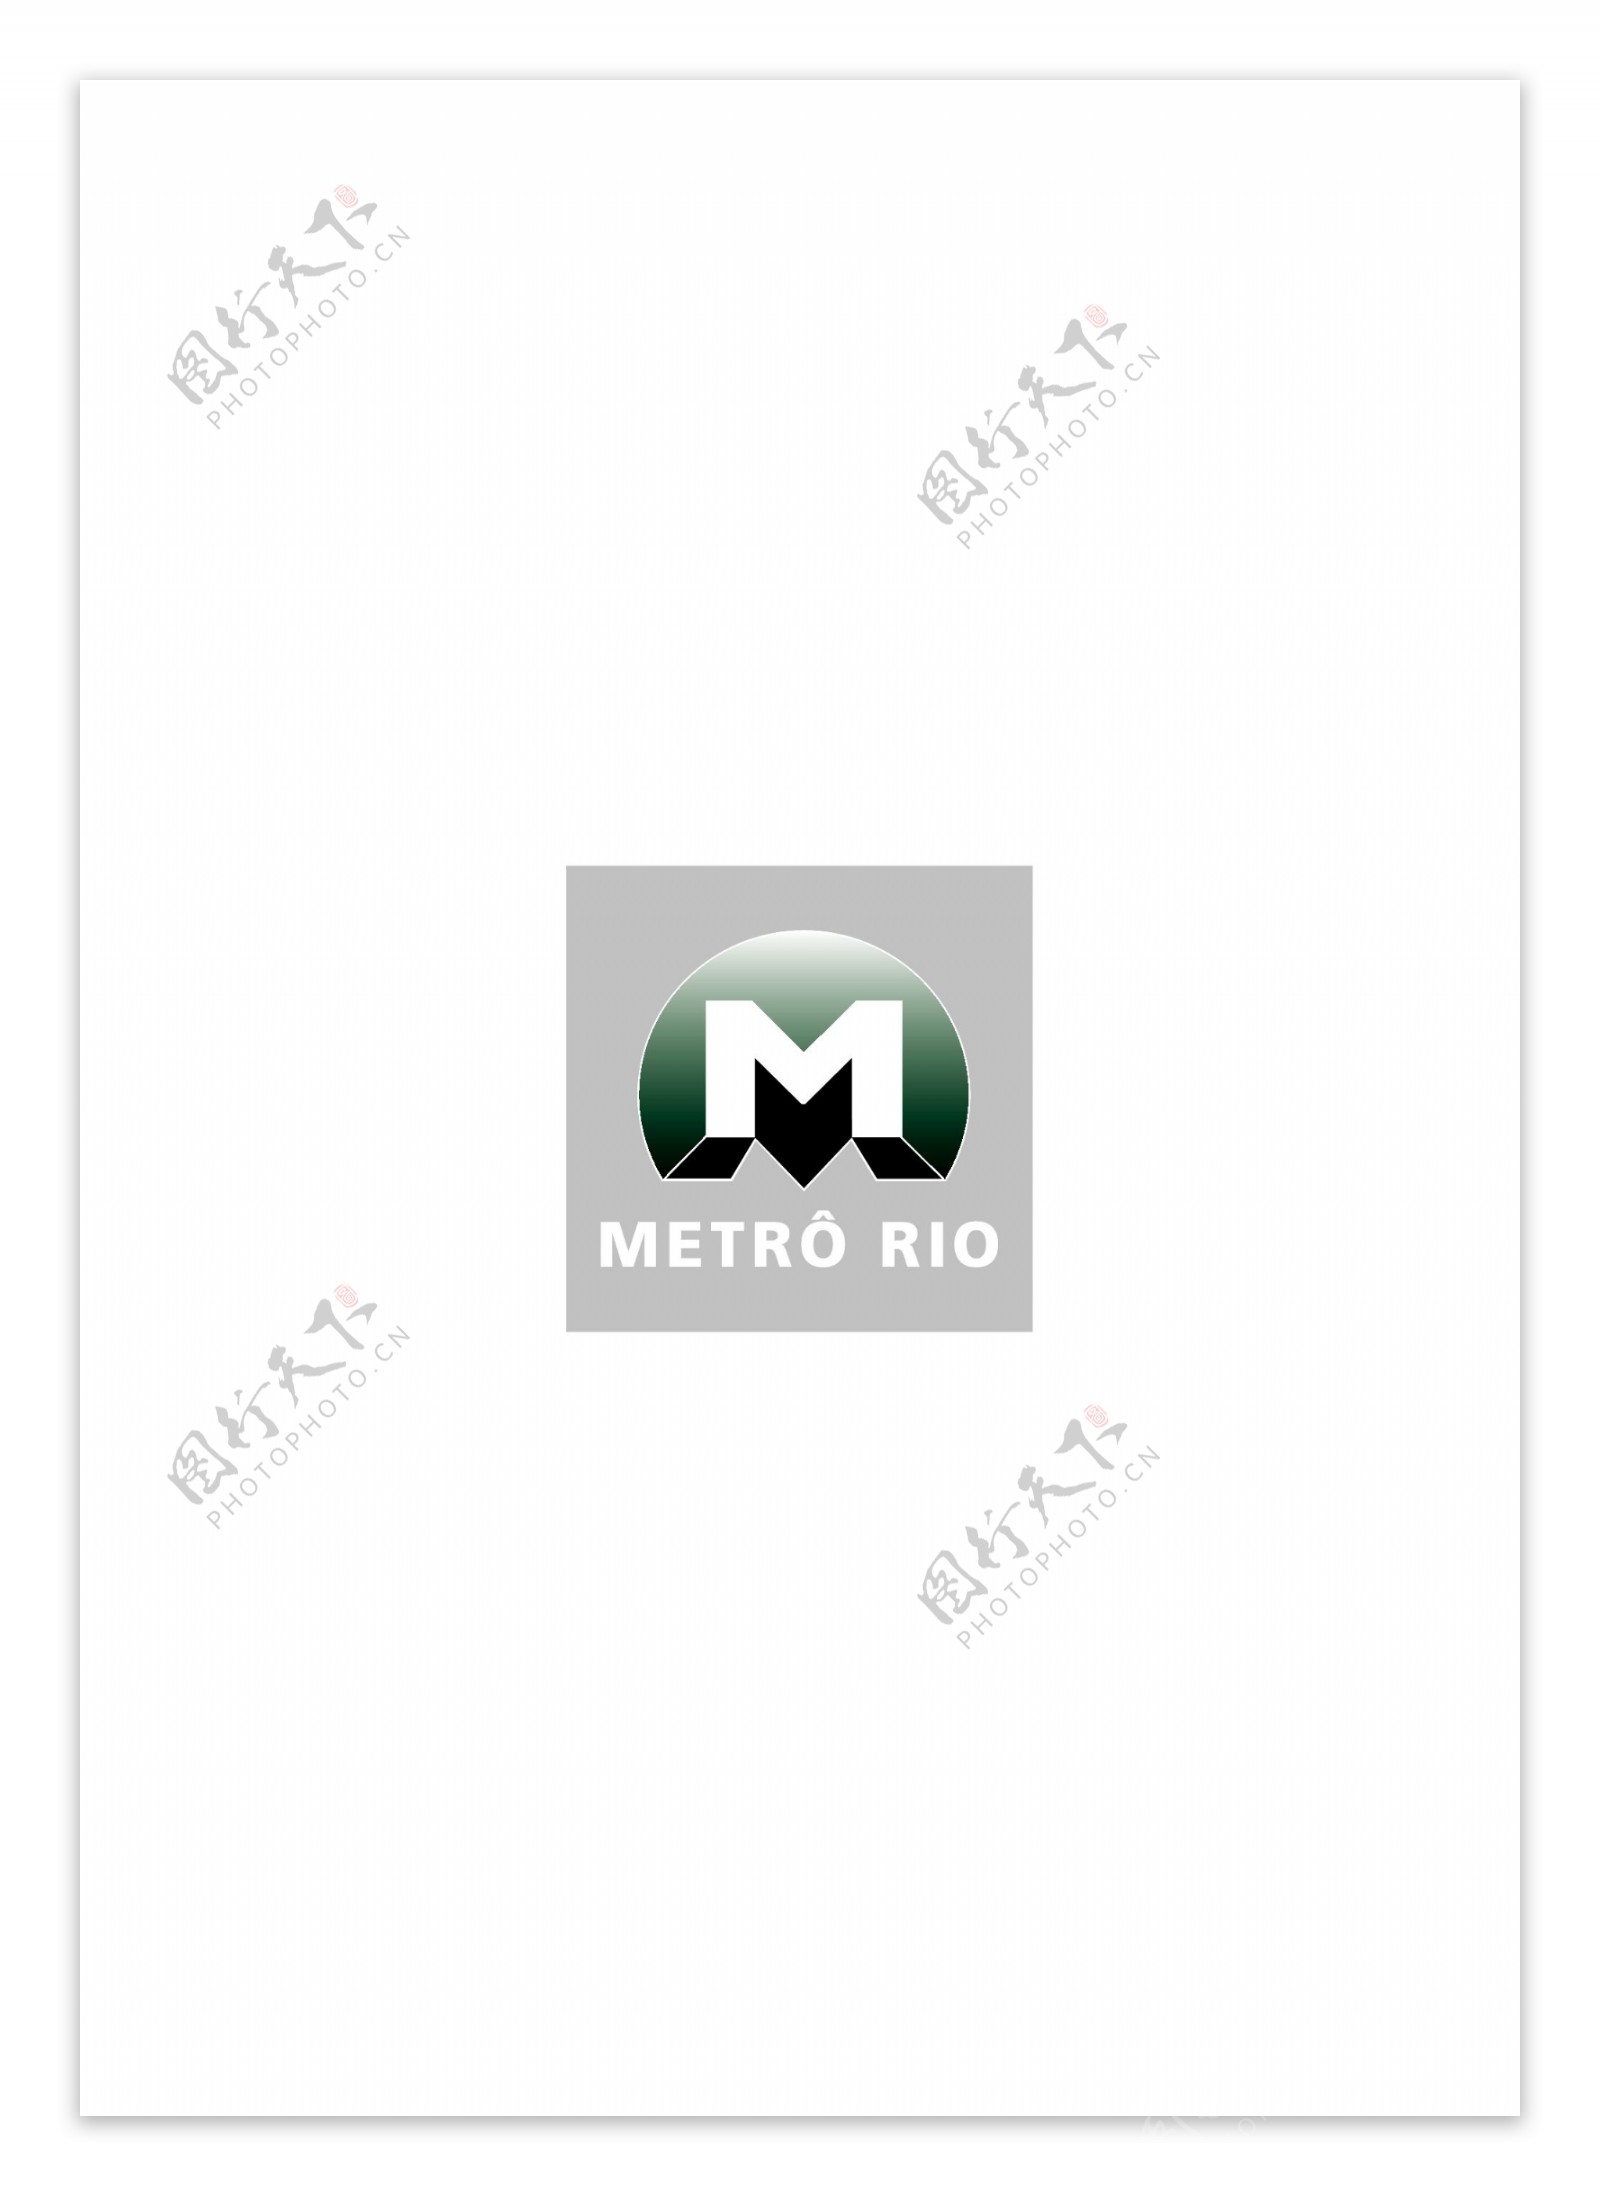 MetroRiologo设计欣赏MetroRio轻轨地铁标志下载标志设计欣赏